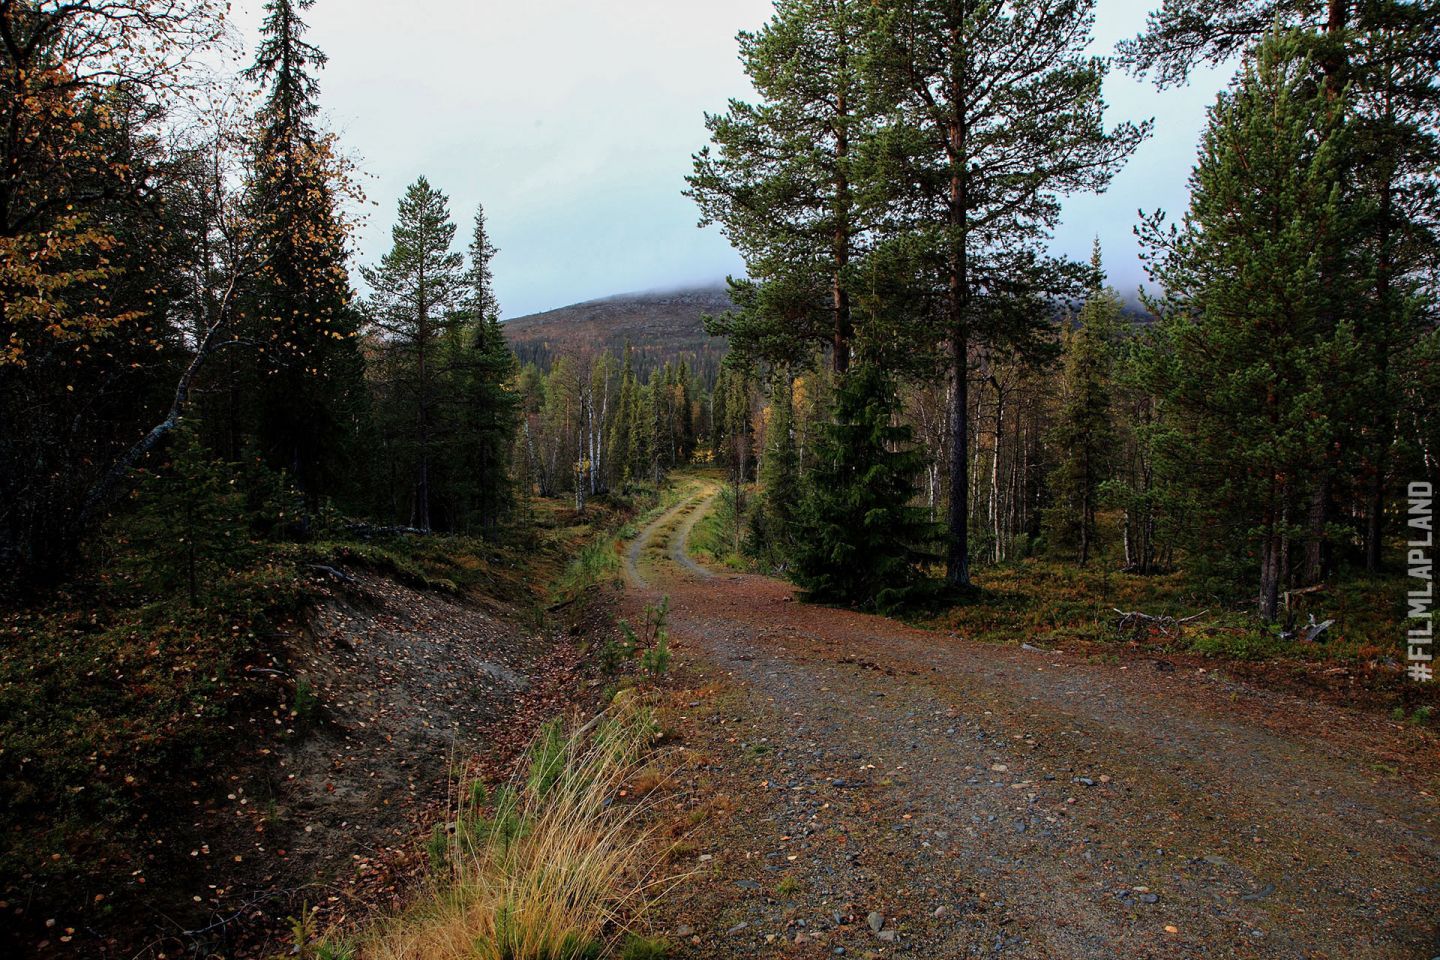 Dirt road through the forest, in Enontekiö, Finland